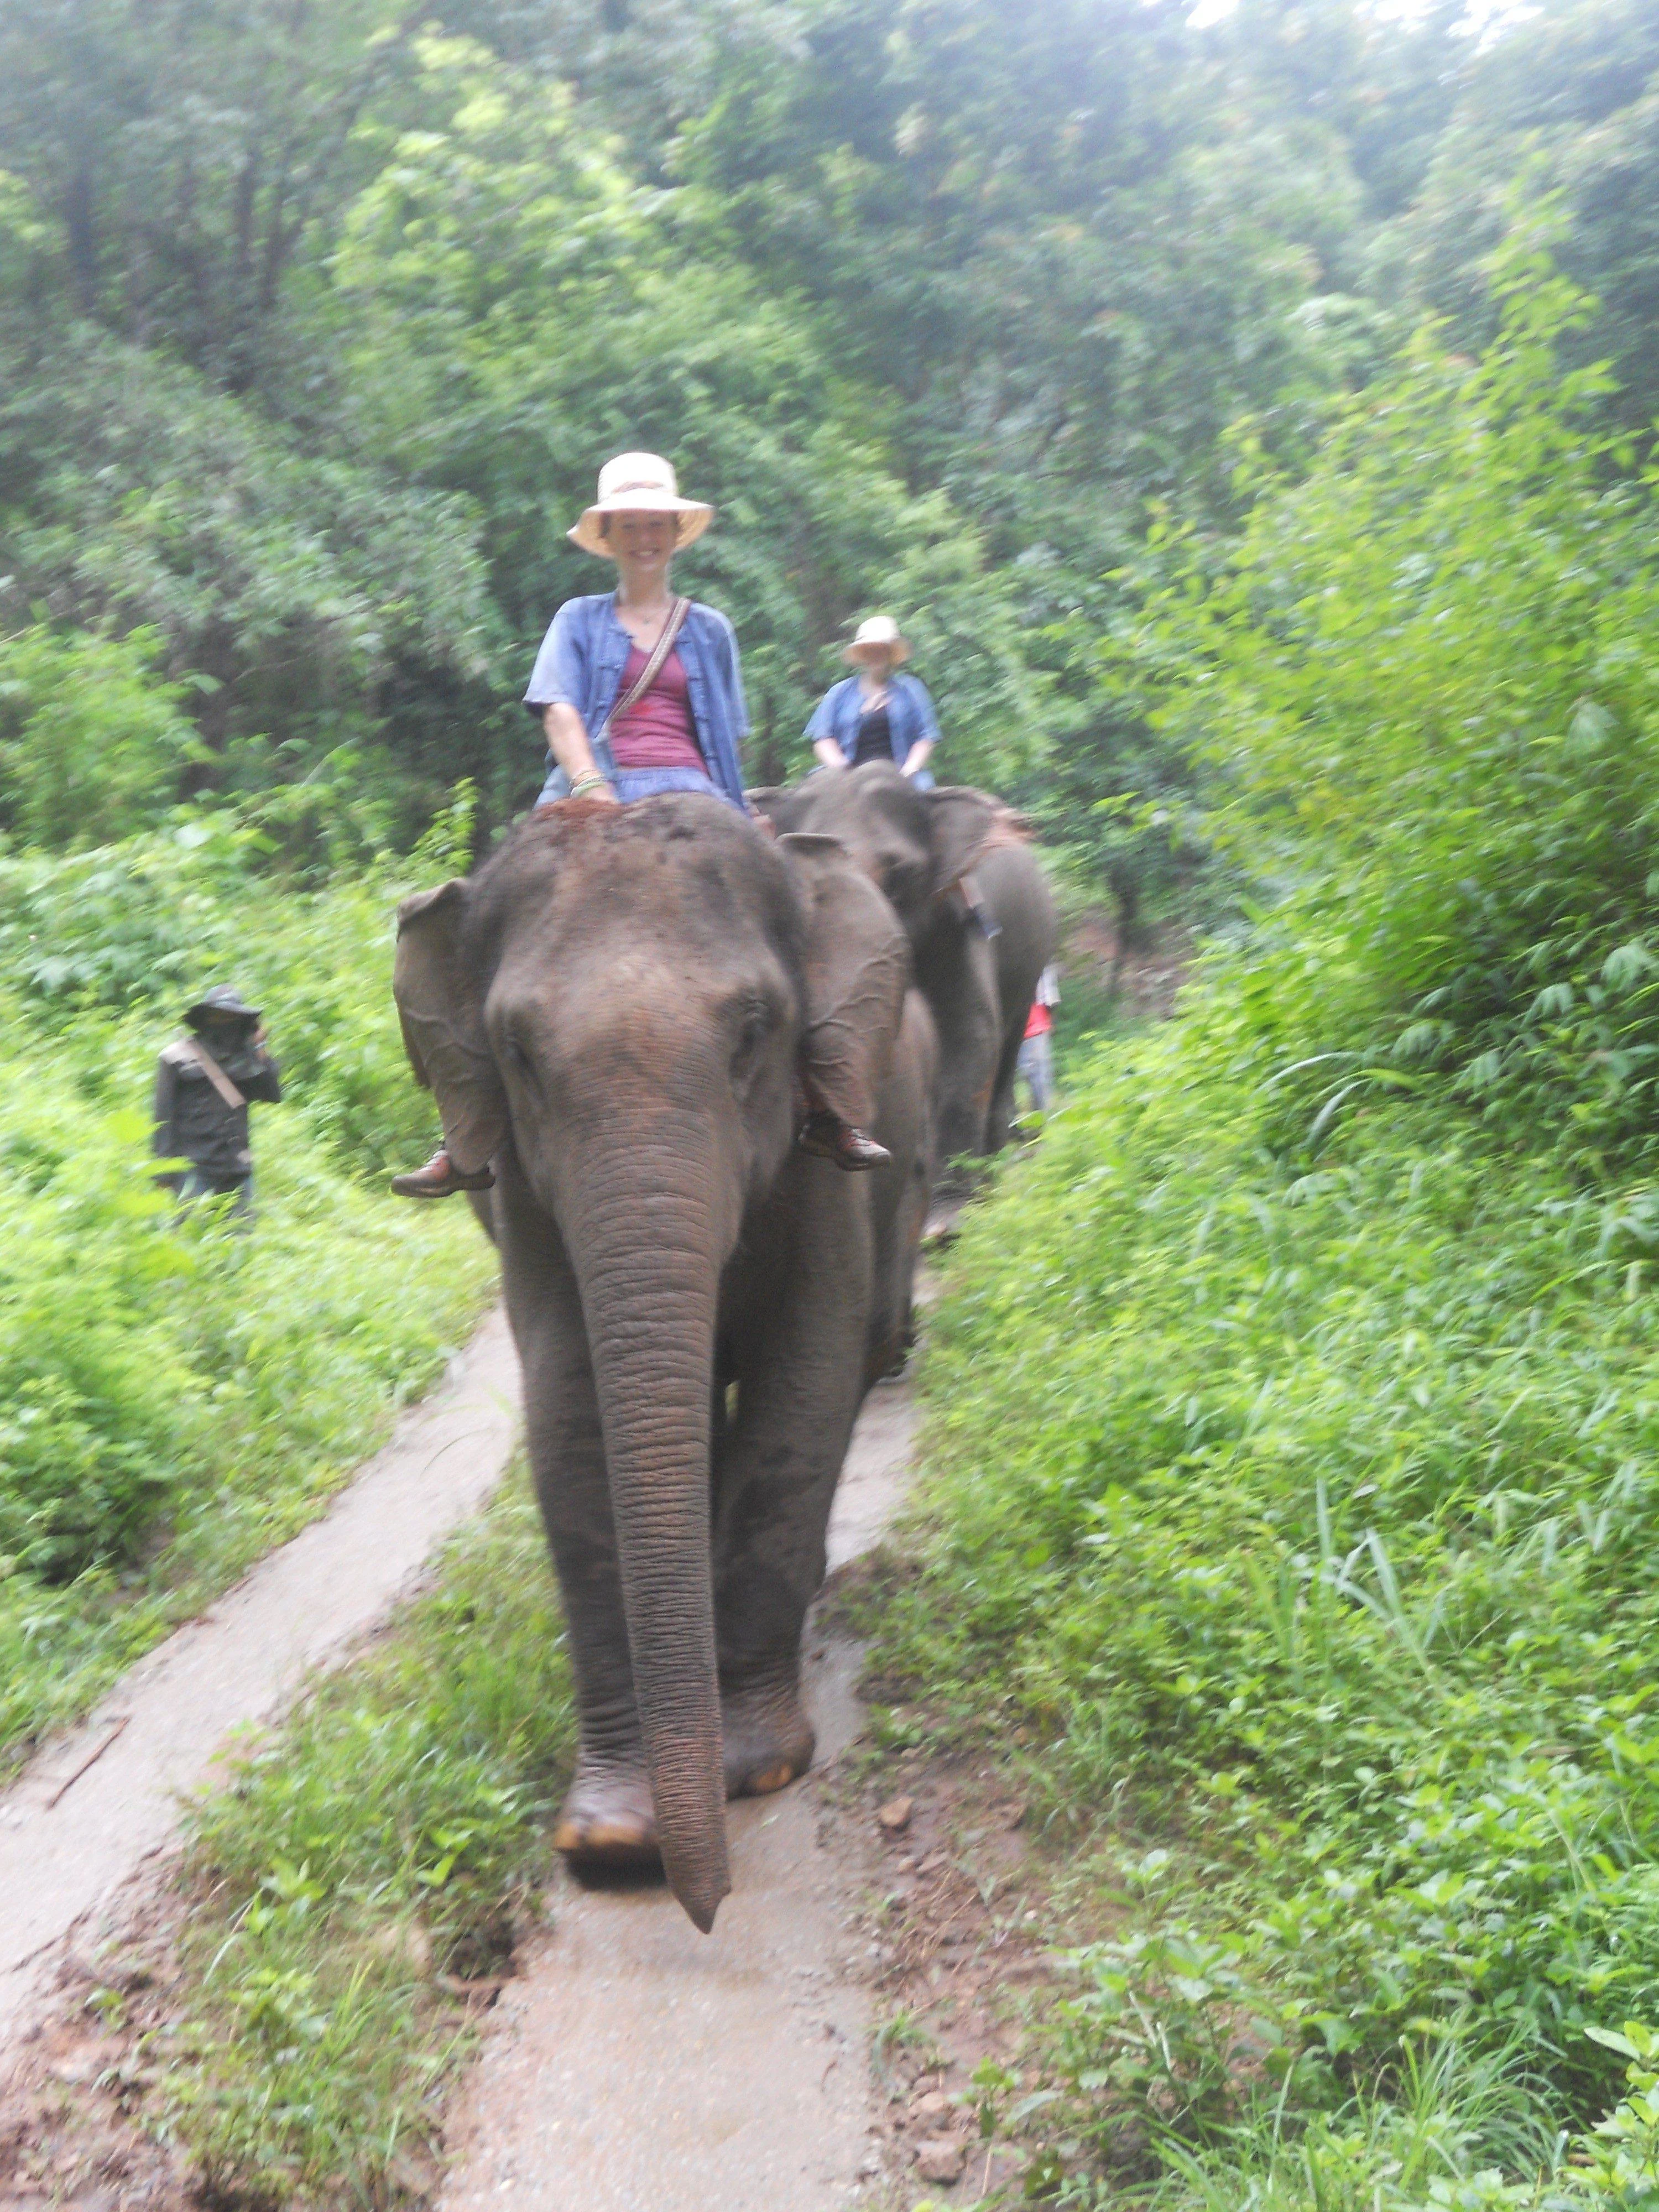 Volunteering with elephants in Thailand.